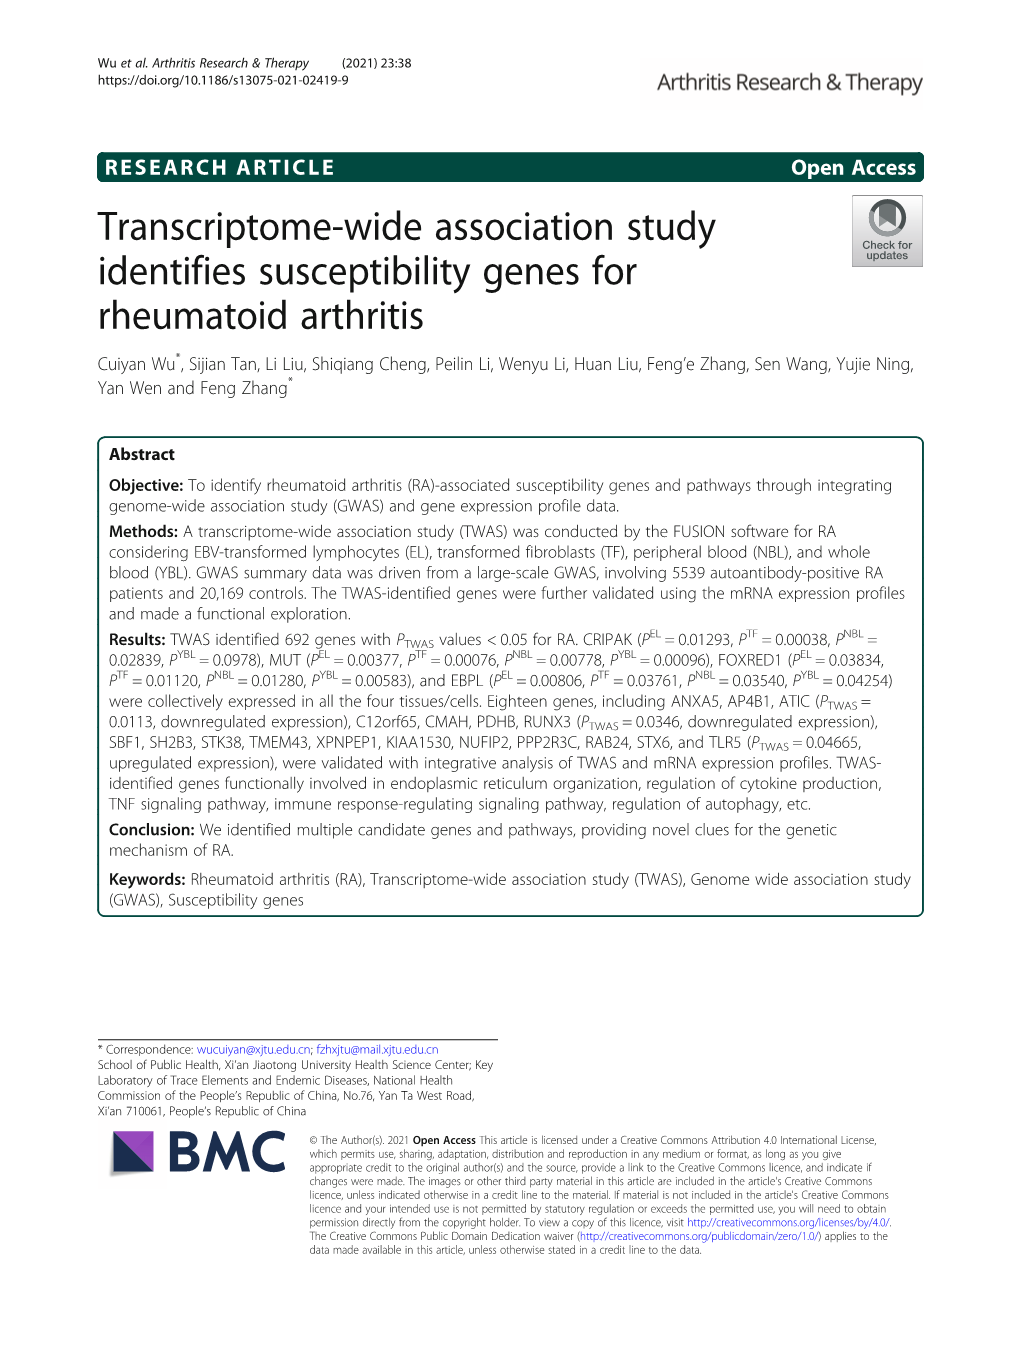 Transcriptome-Wide Association Study Identifies Susceptibility Genes For